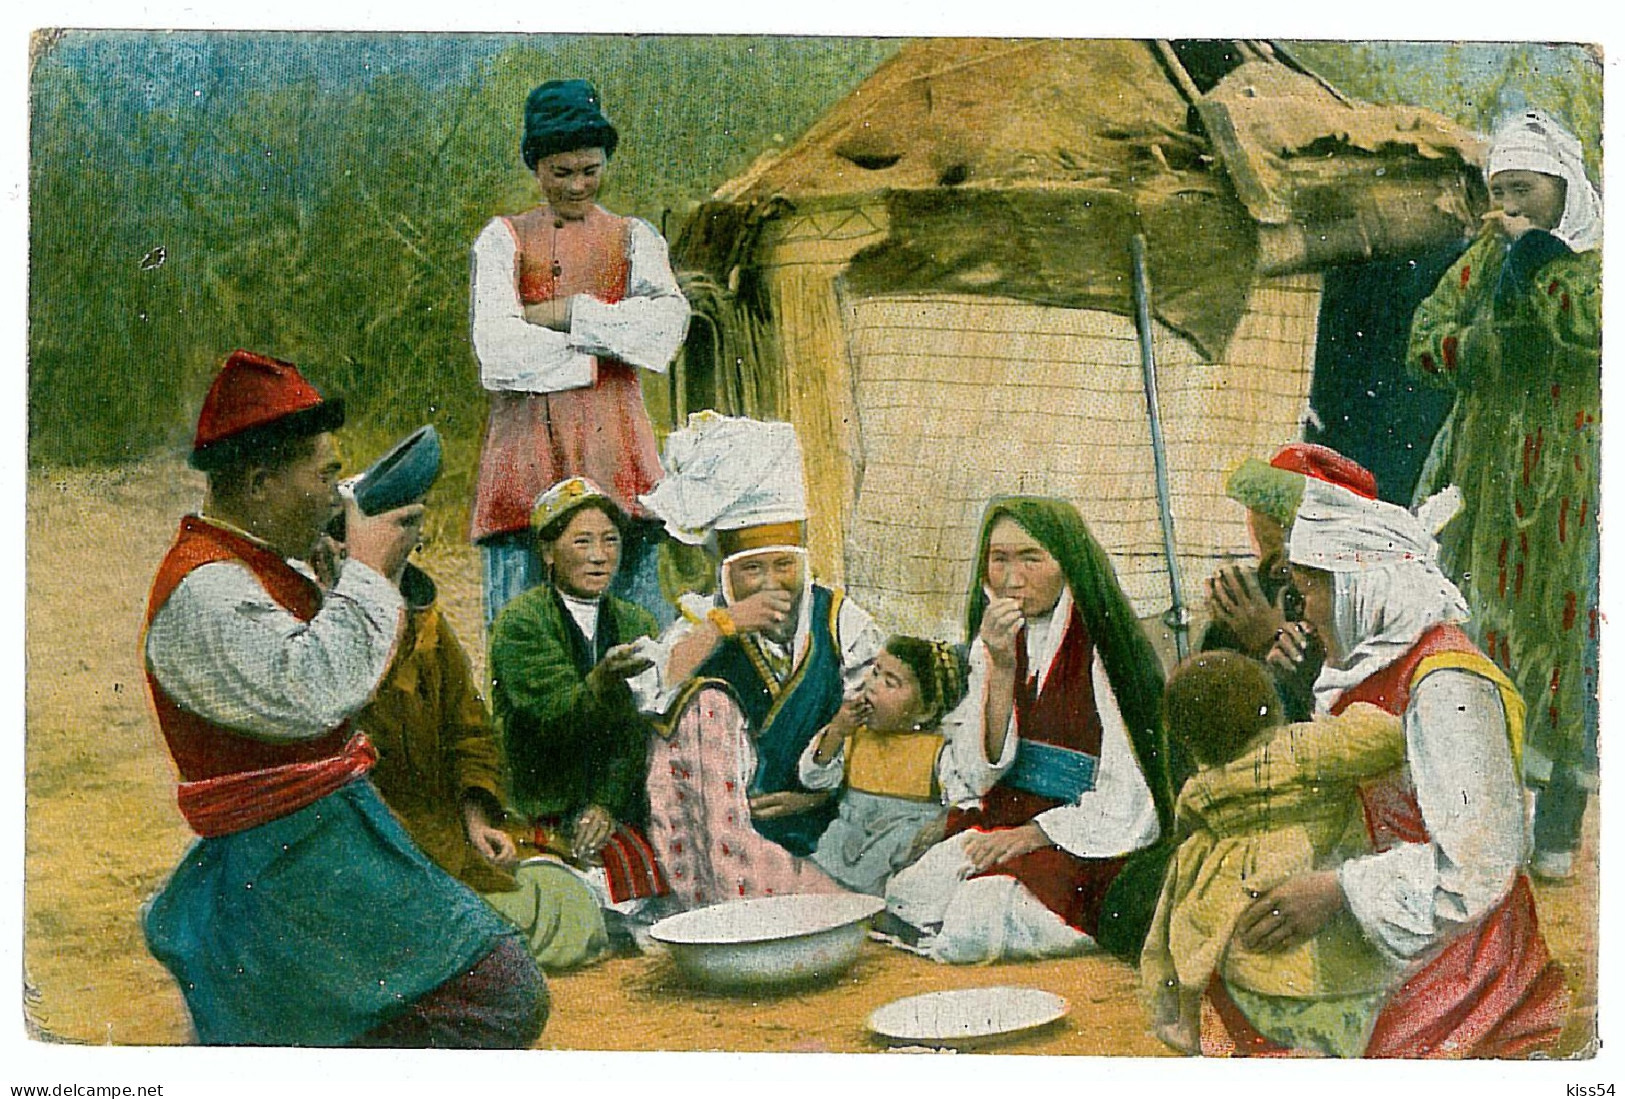 KYR 4 - 7846 ETHNICS, From Central Asian, Kyrgyzstan - Old Postcard - Used - 1917 - Kyrgyzstan